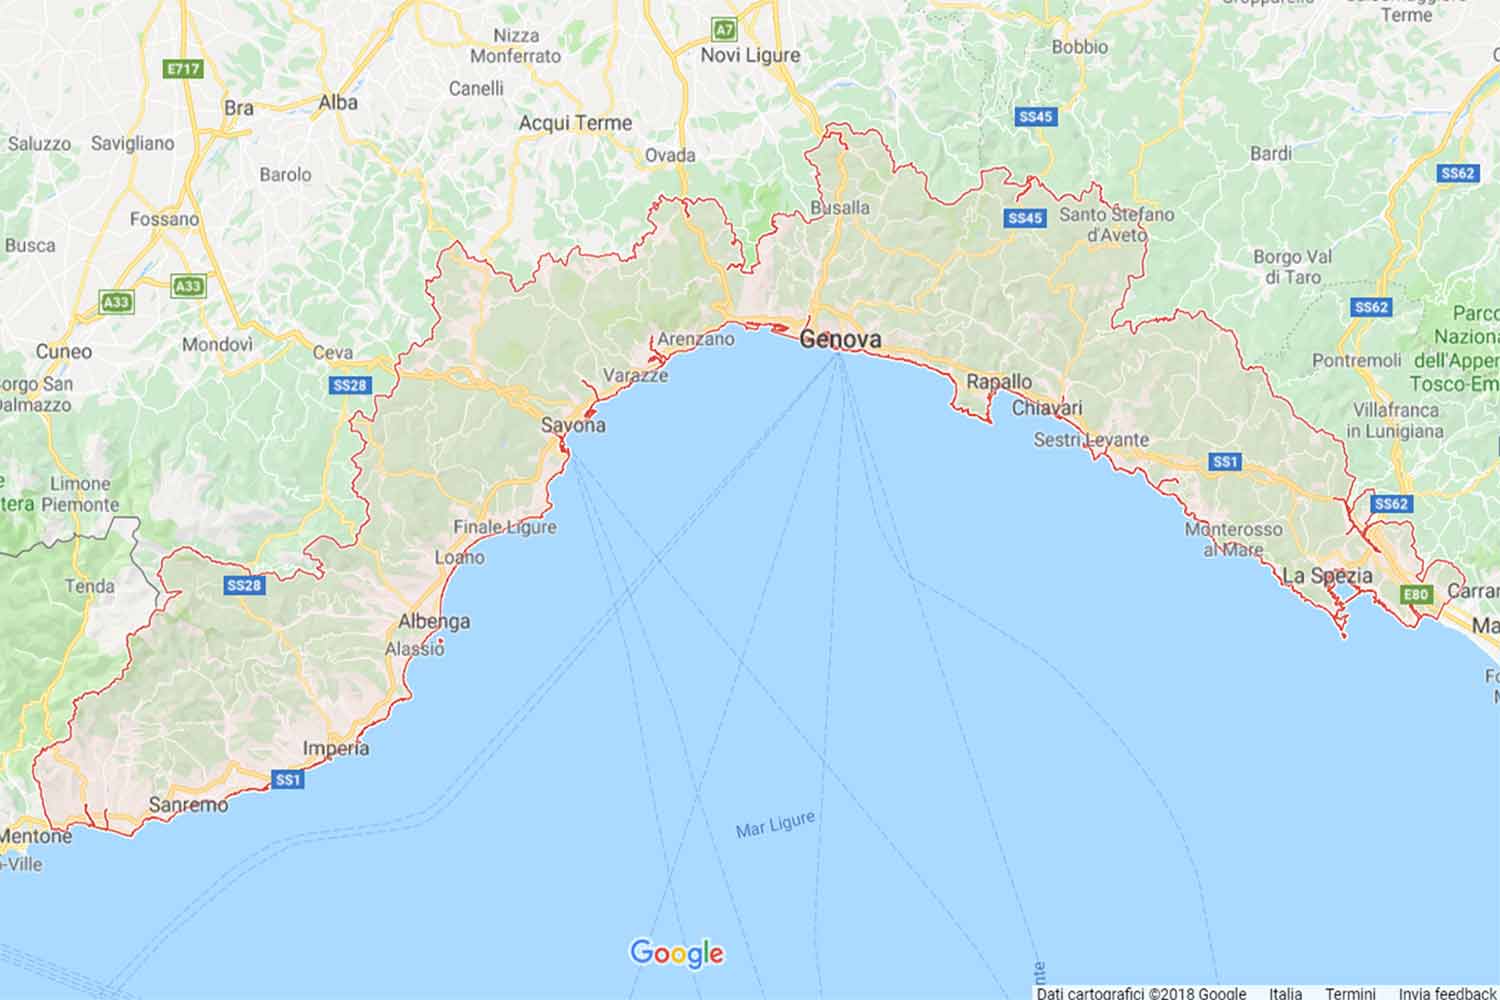 Liguria - Imperia - Pietrabruna Preventivi Veloci google maps